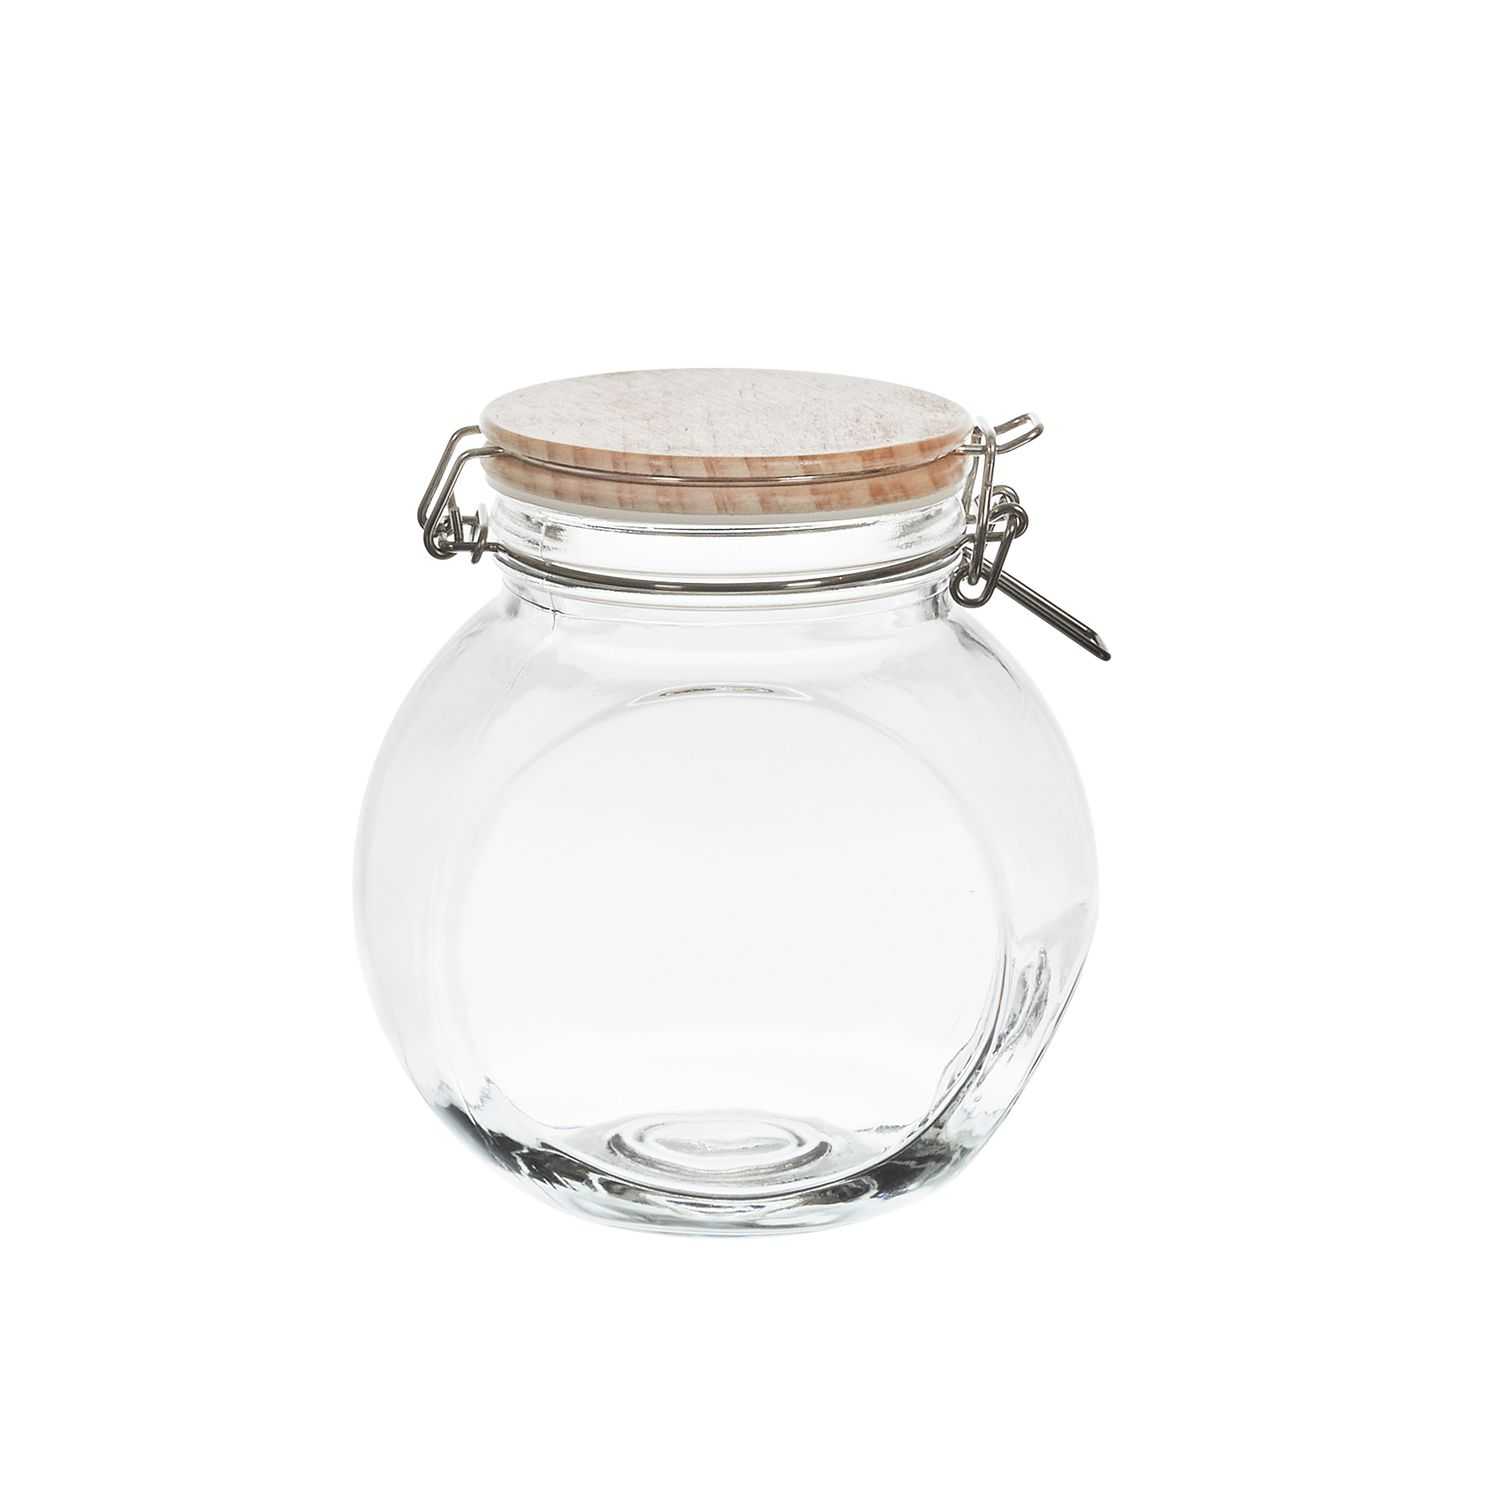 Glazen snoeppot met houten deksel 1,3liter